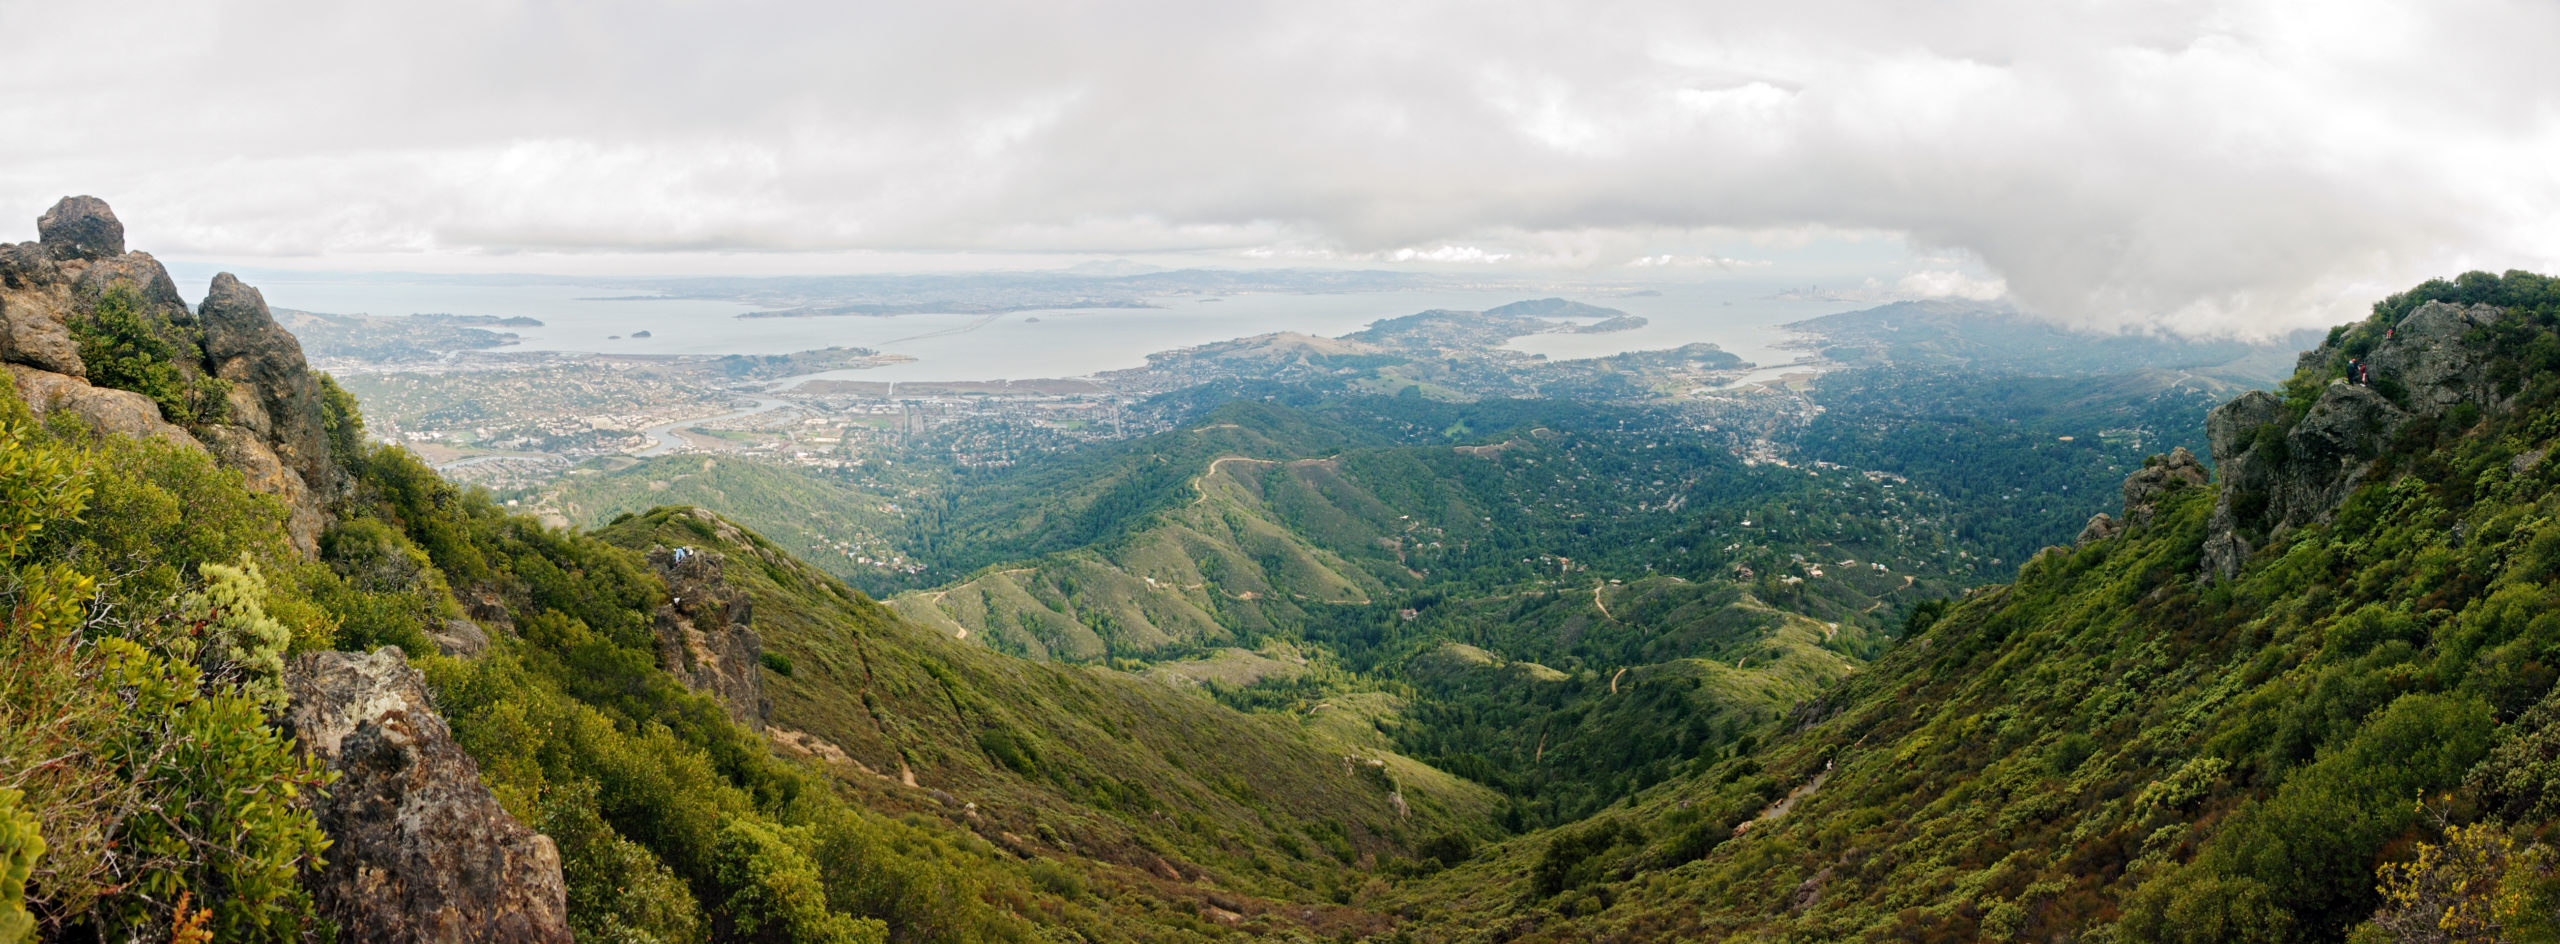 View of Marin County, California, USA